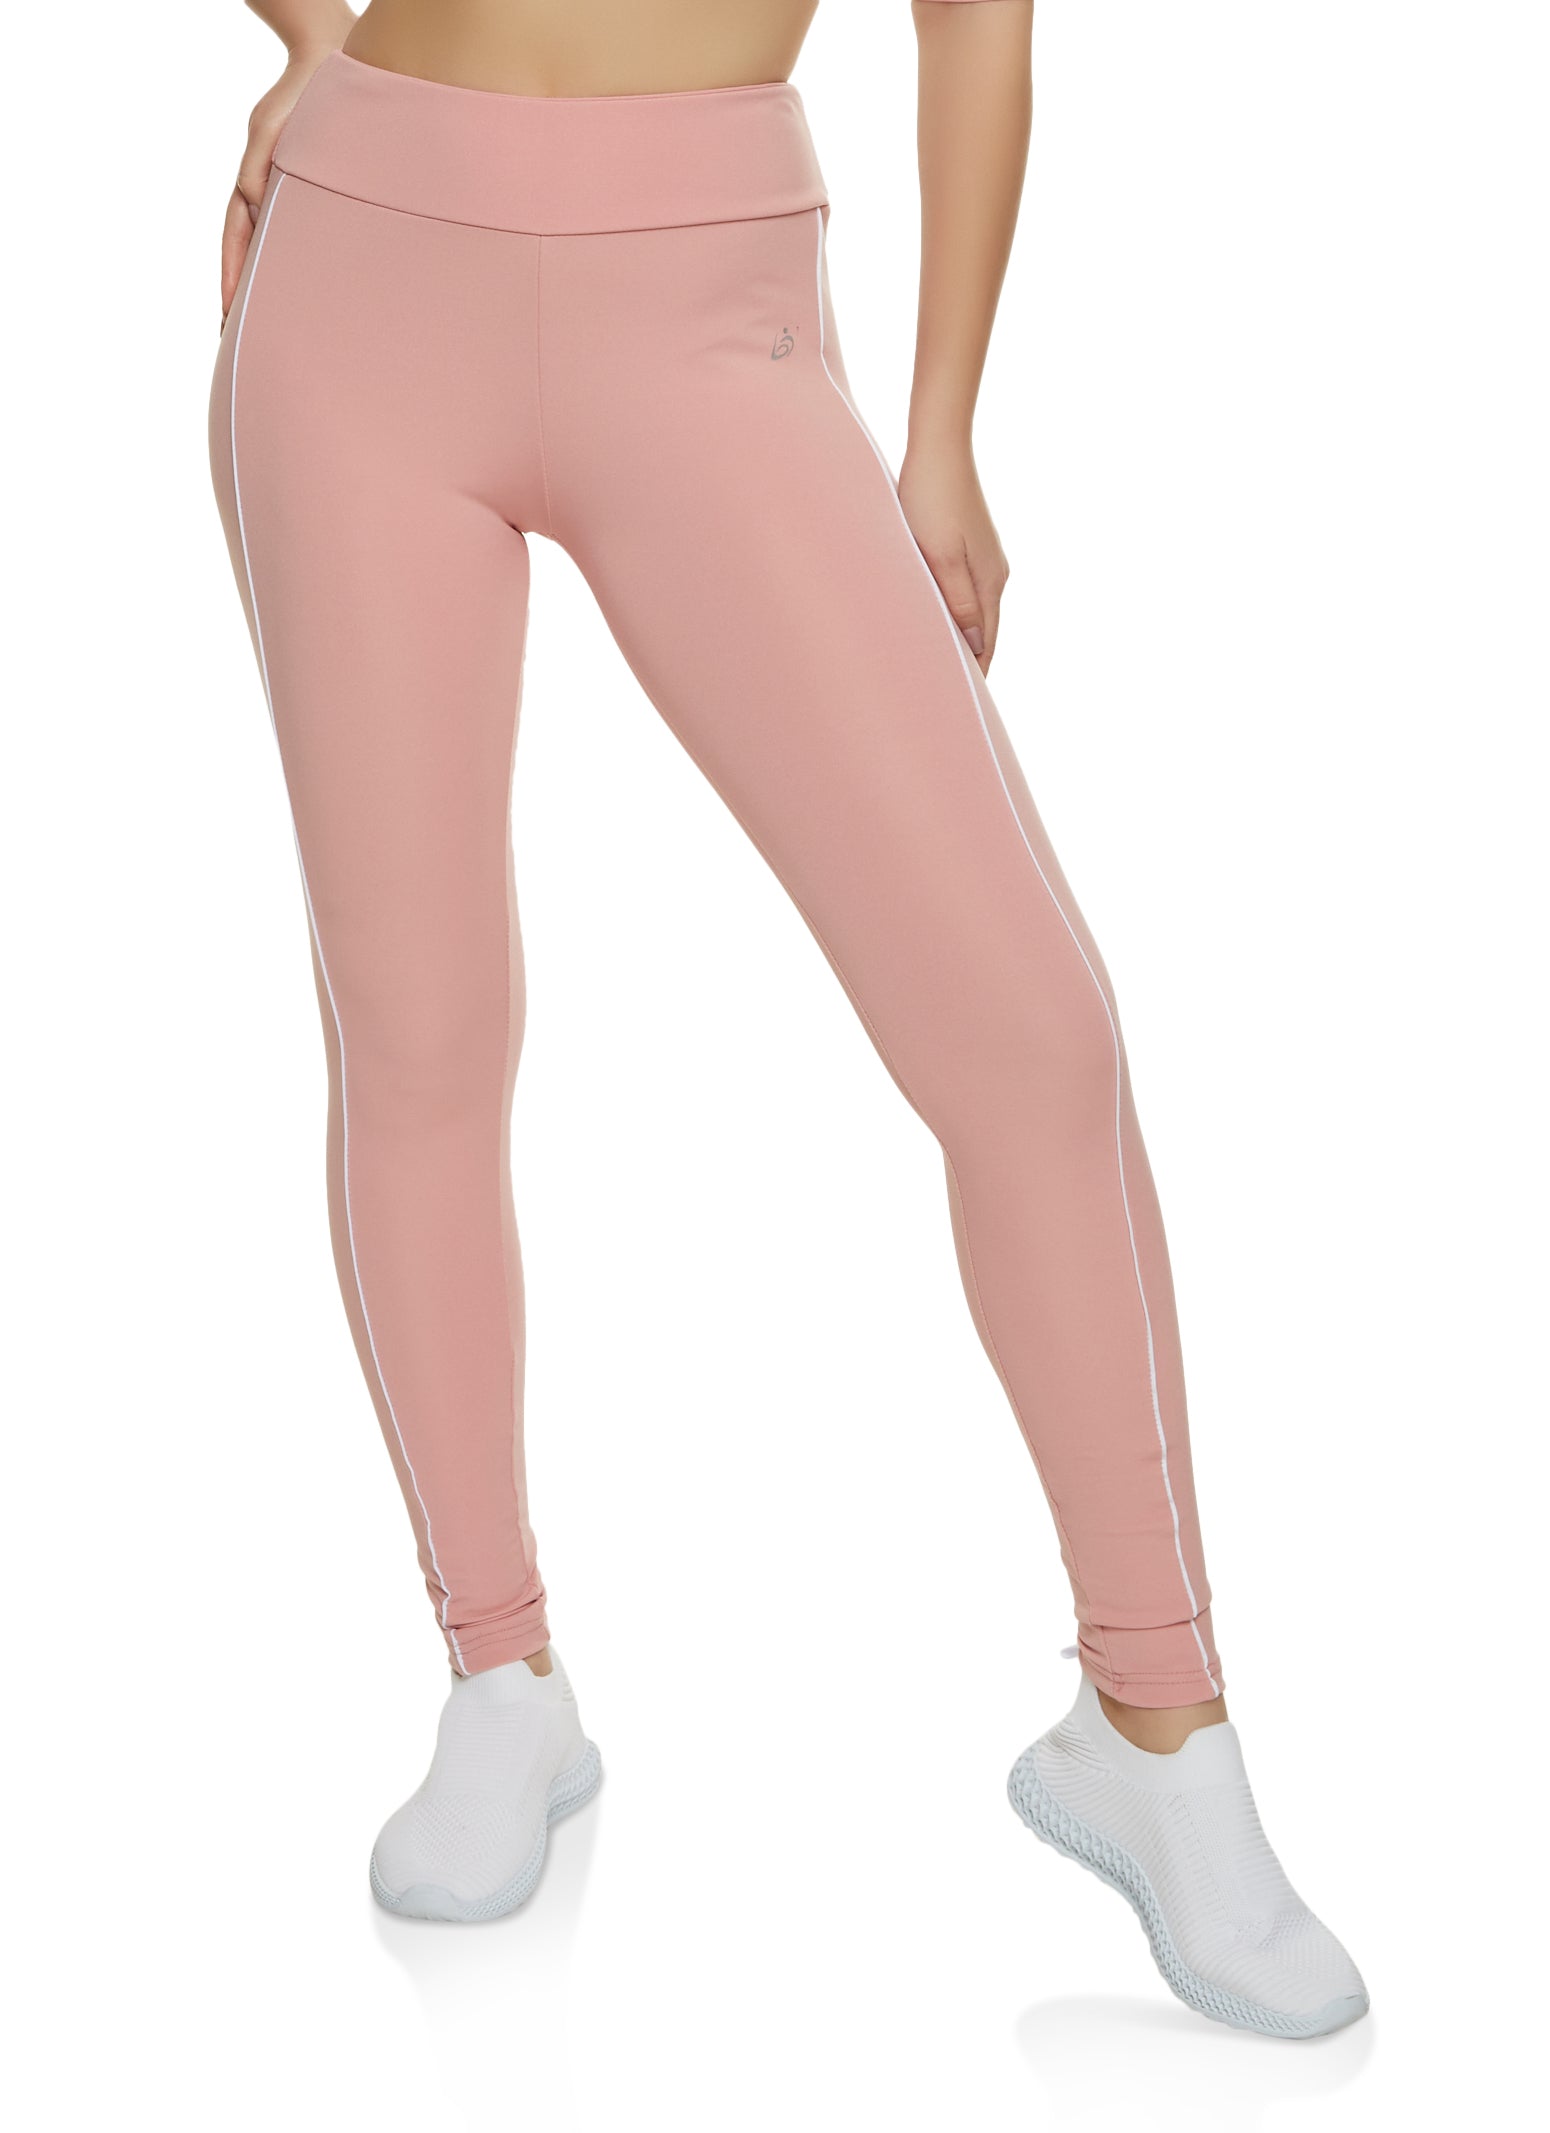 Victoria's Secret Pink Cotton High Waisted Leggings, Women's